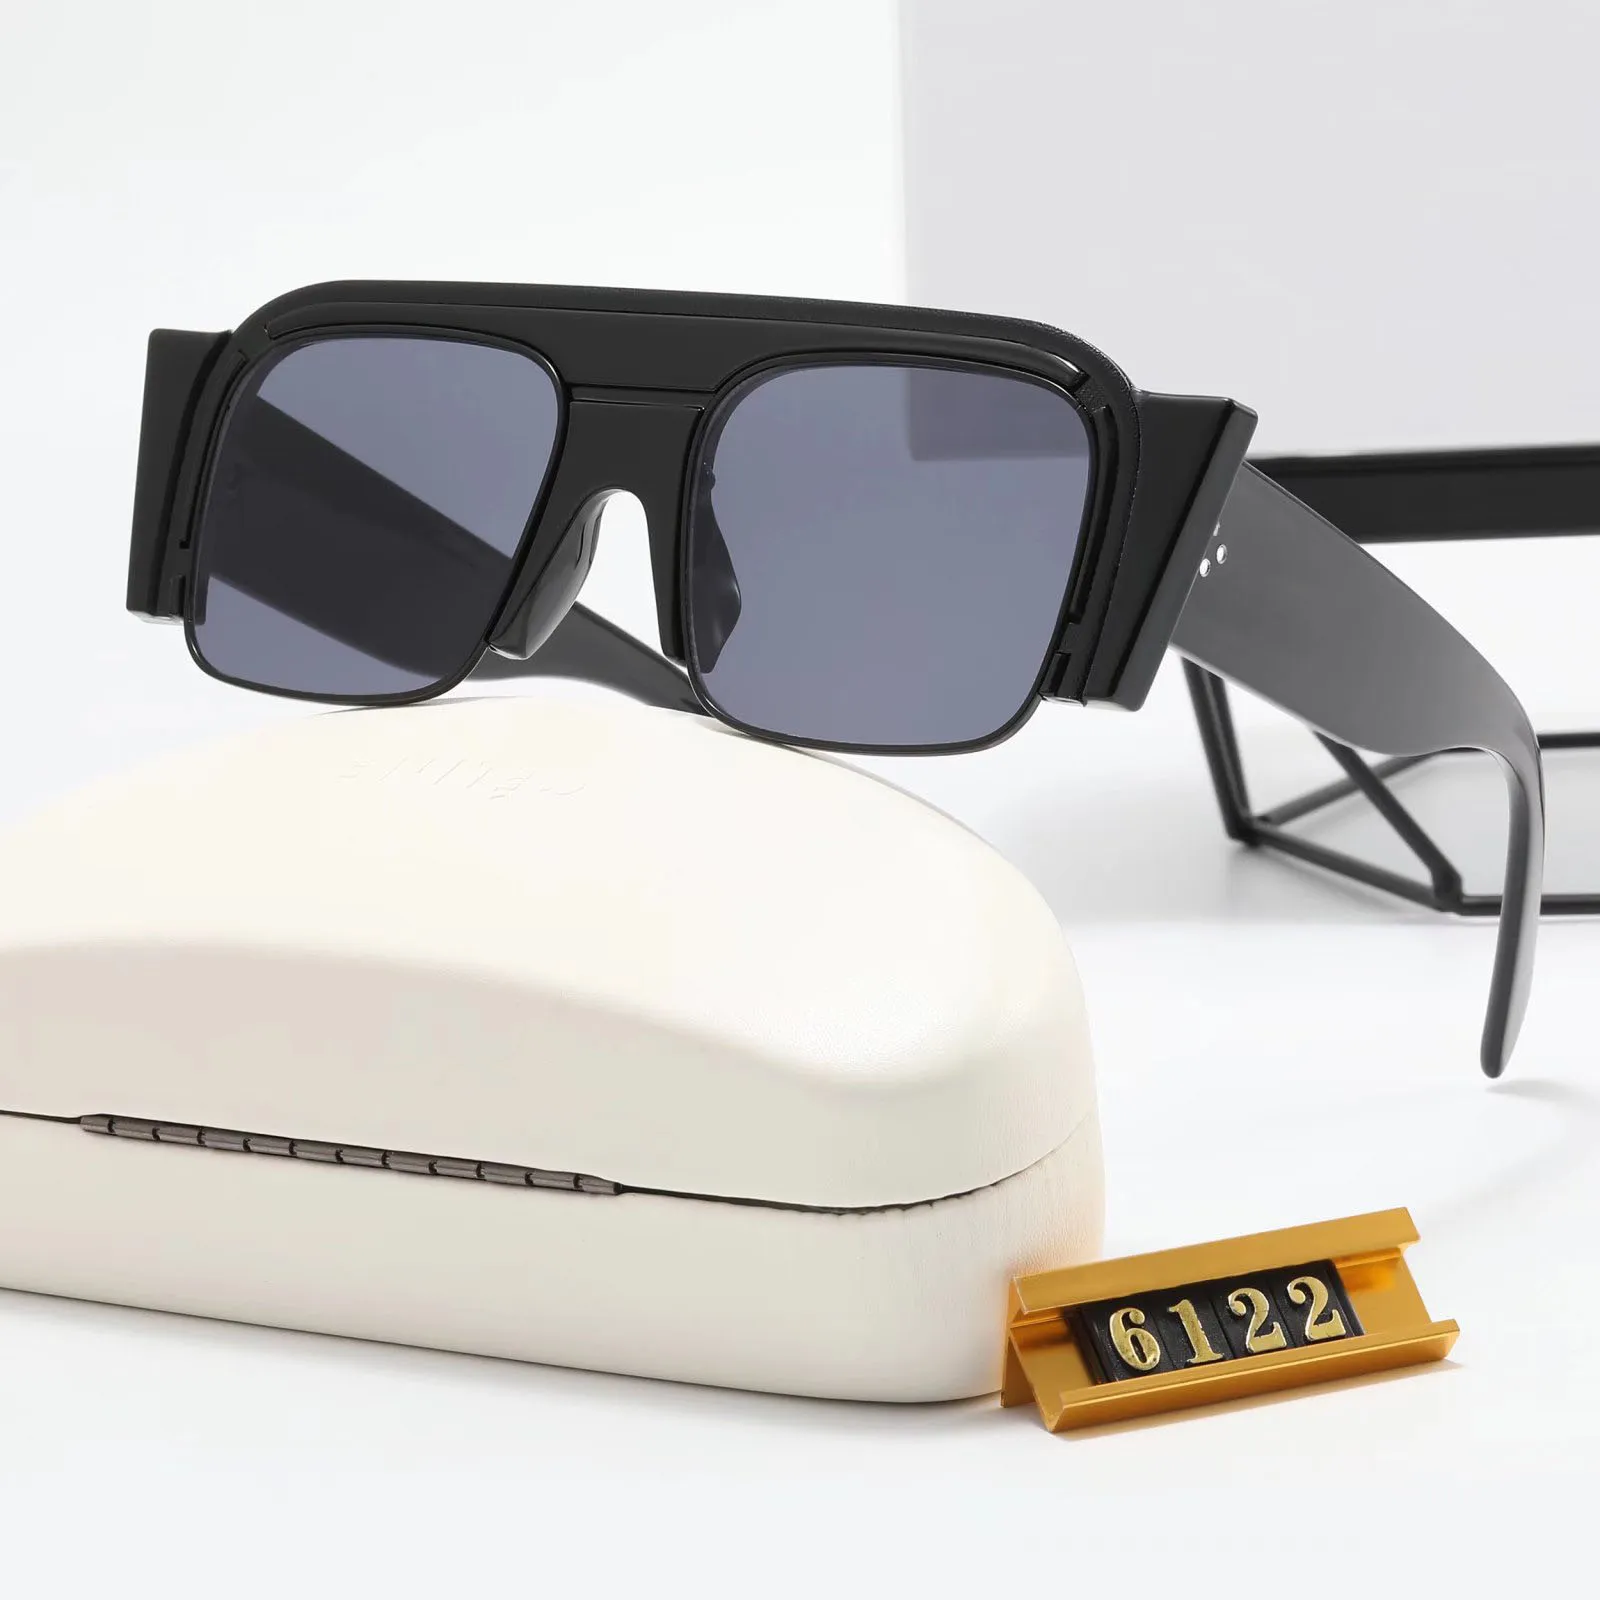 Fashion Polarized Sunglasses Travel men's and women's 6122 Sunglasses without box